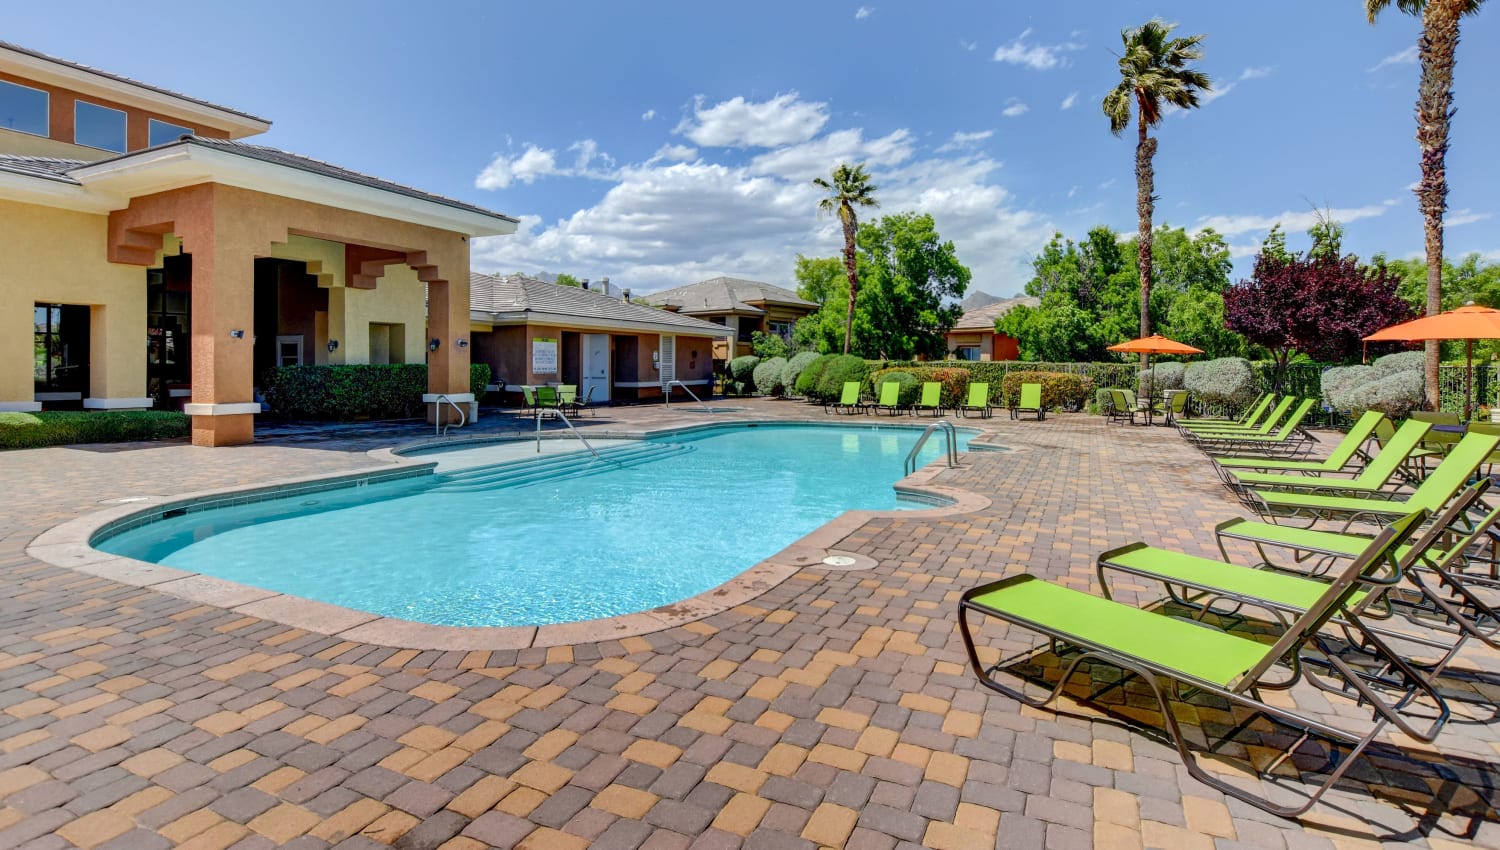 Sparkling pool at Canyon Villas Apartments in Las Vegas, Nevada